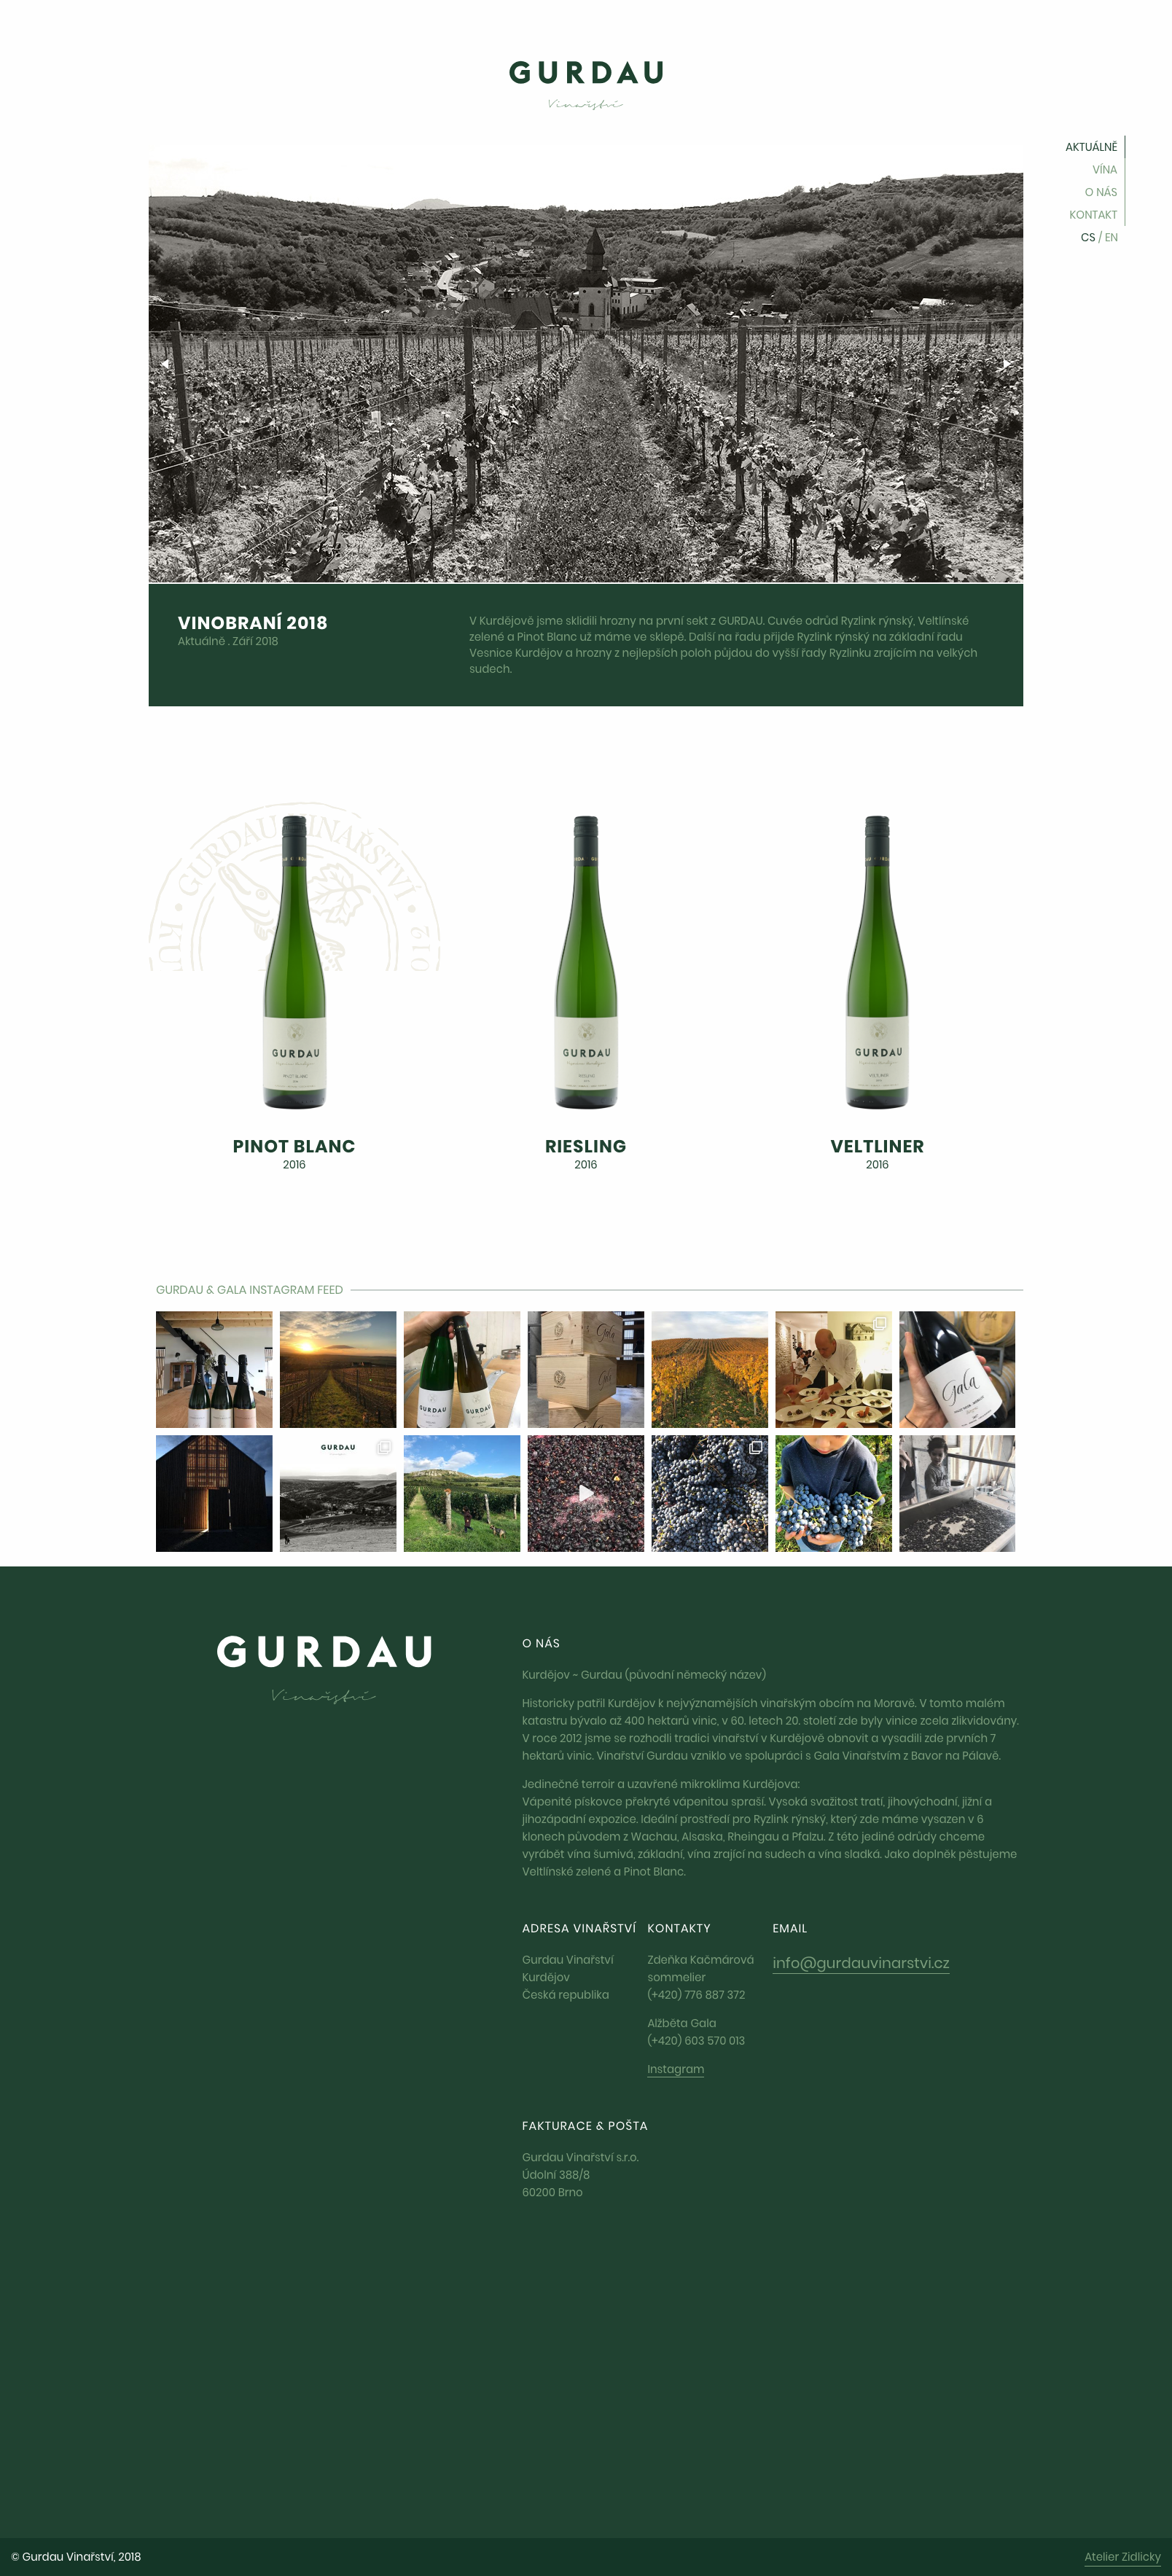 Gurdau Vinařství - tvorba www stránek, Webdesign